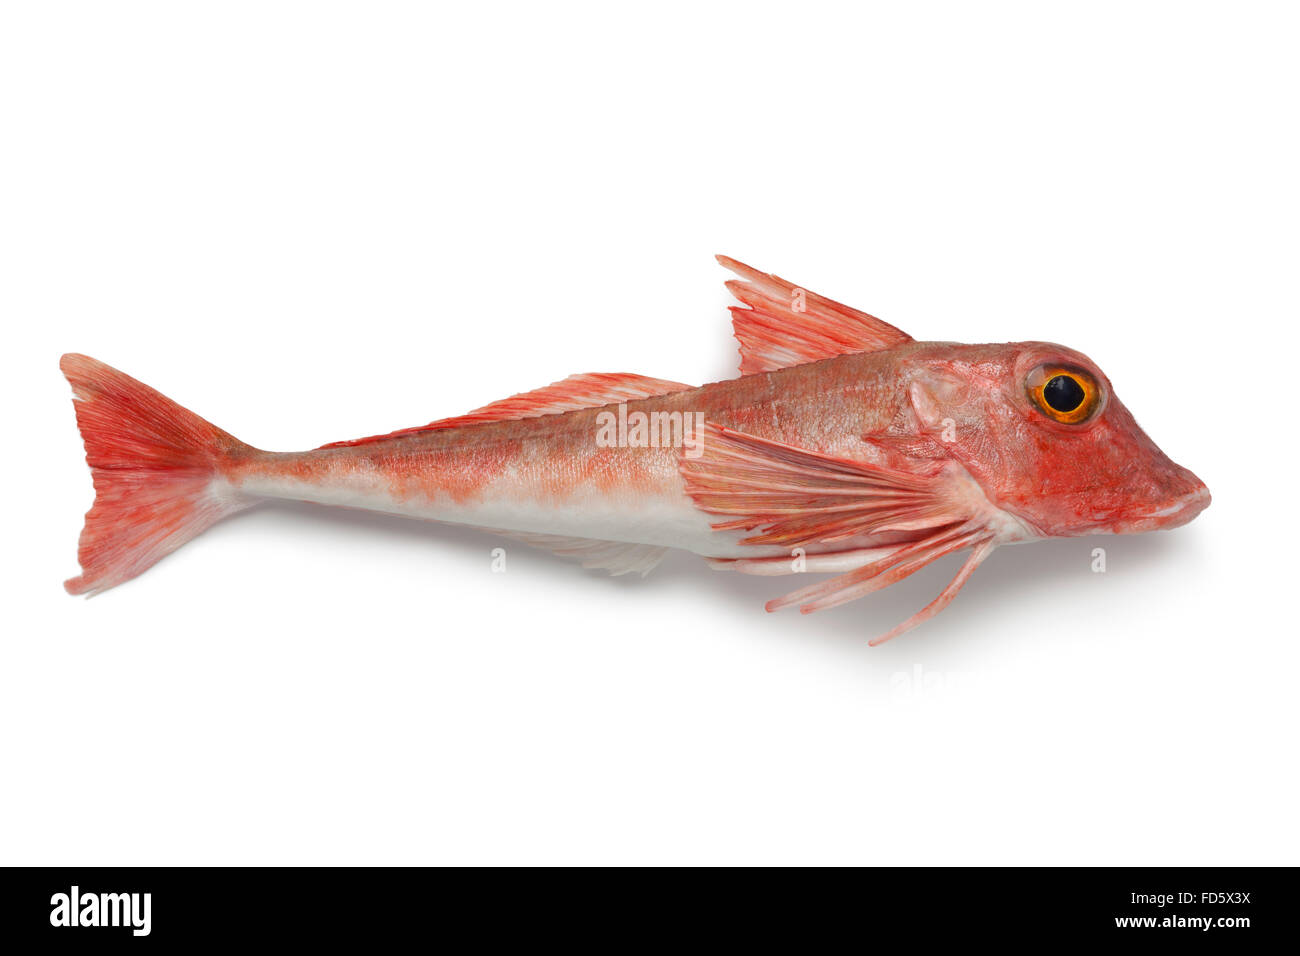 Fresh red tub gurnard fish on white background Stock Photo